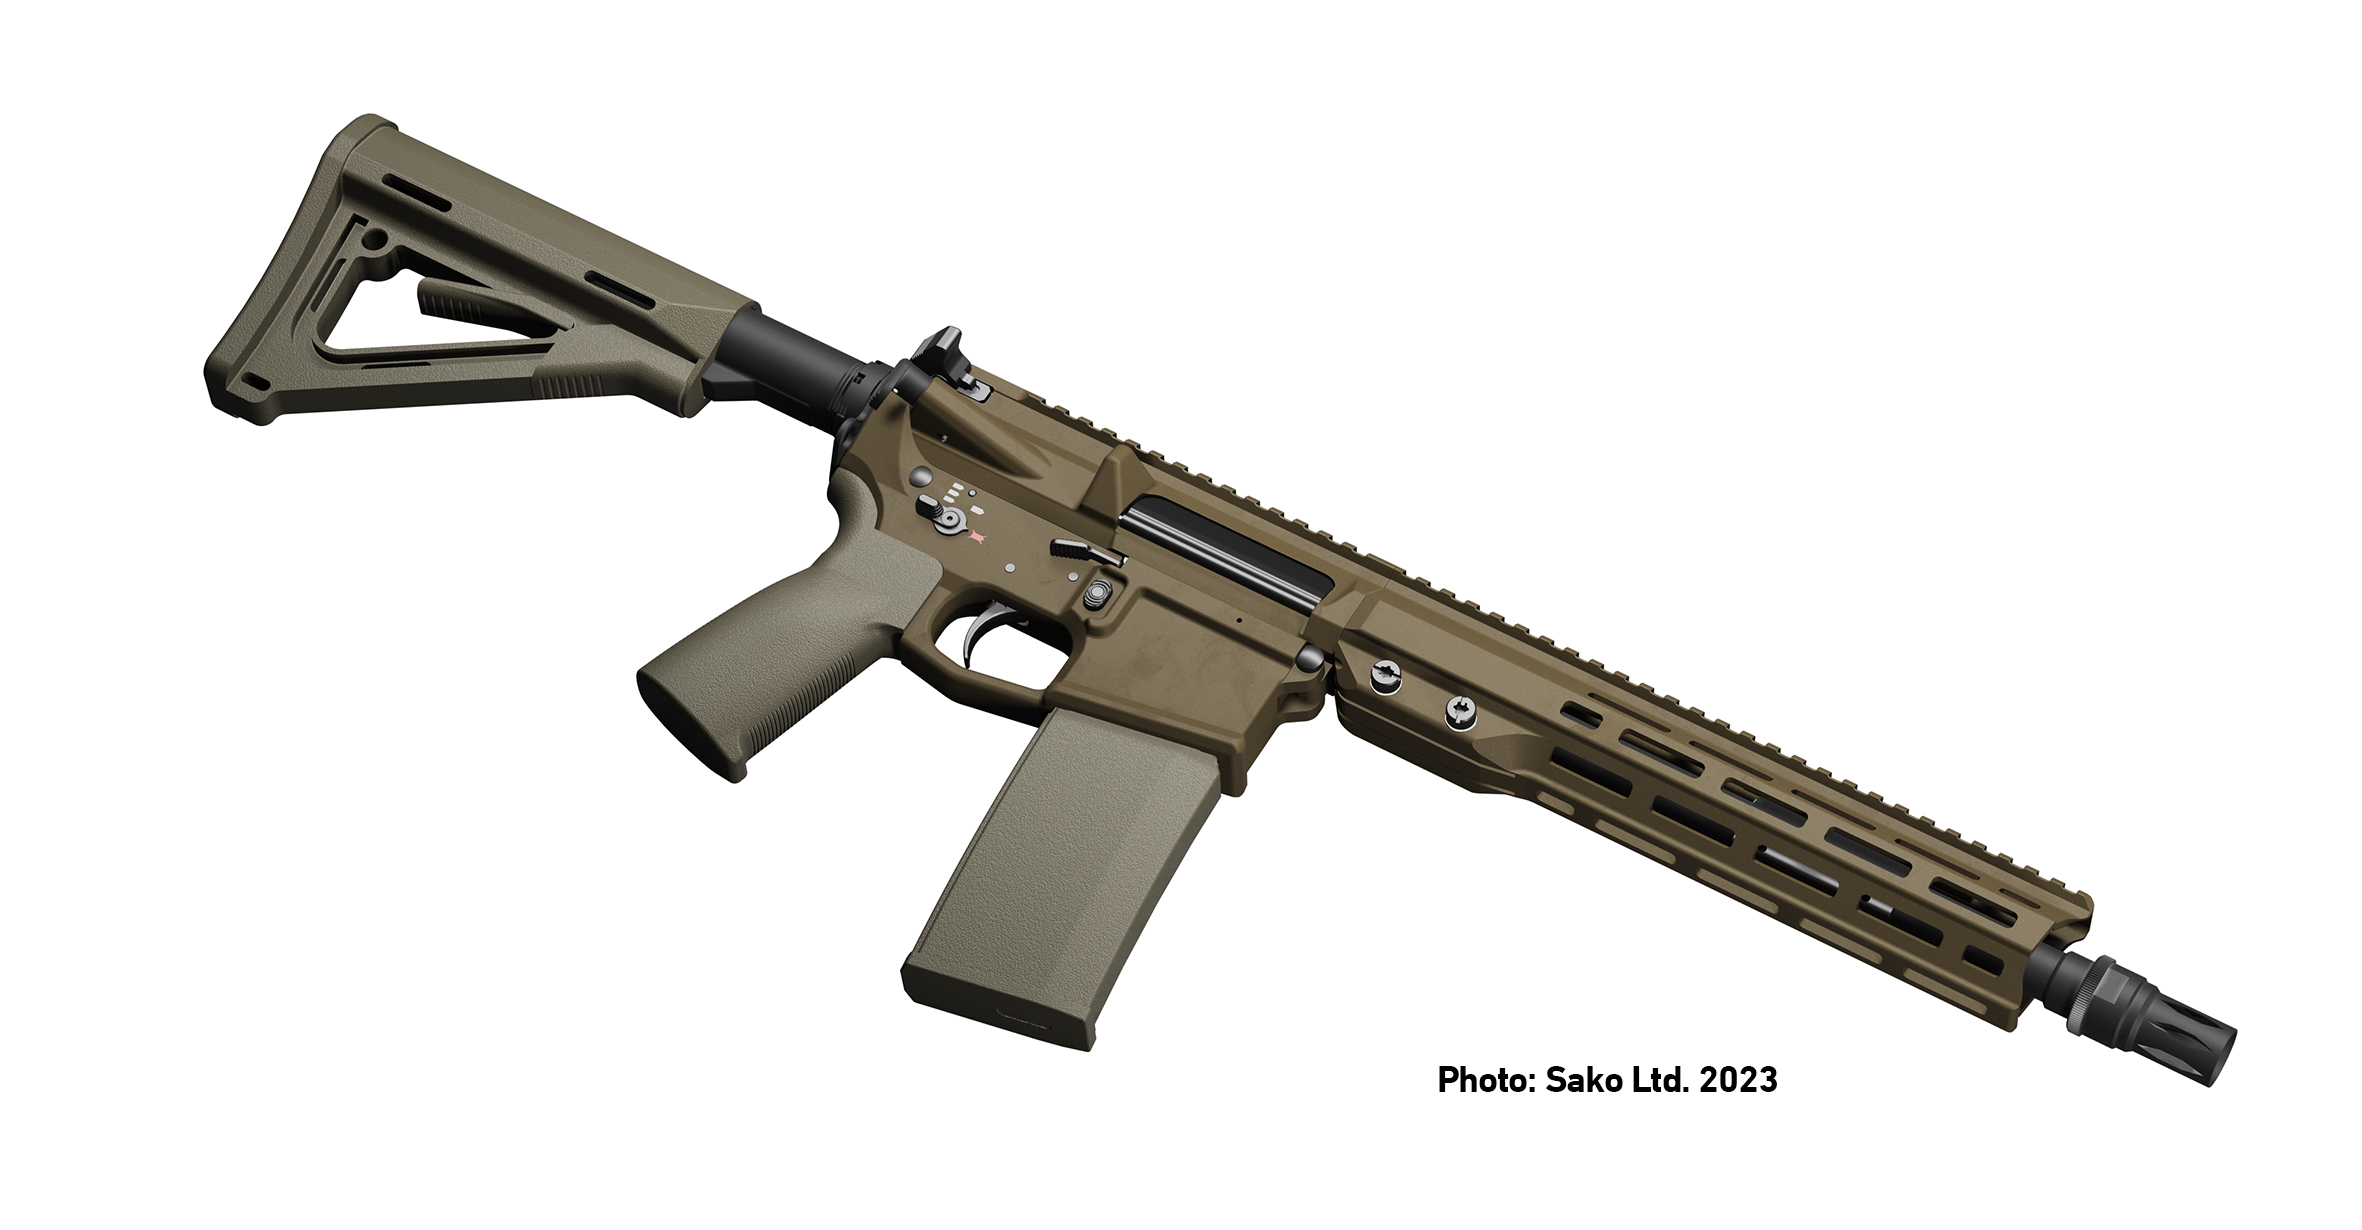 5.56×45 caliber assault rifle